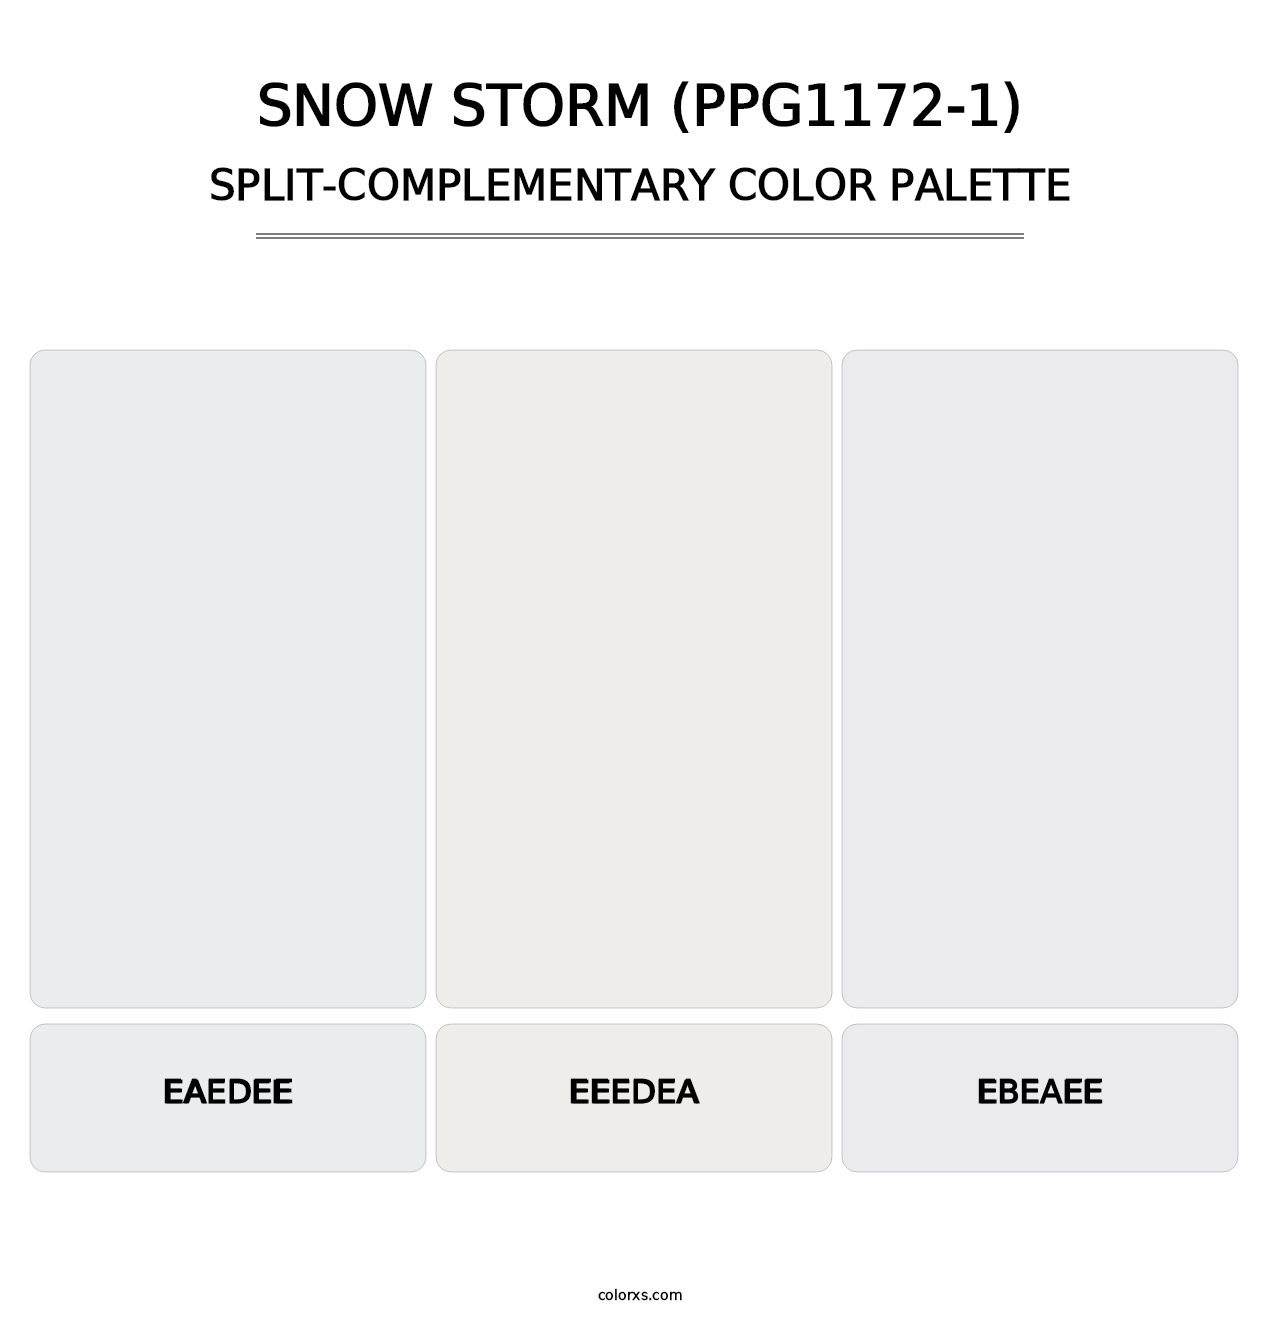 Snow Storm (PPG1172-1) - Split-Complementary Color Palette